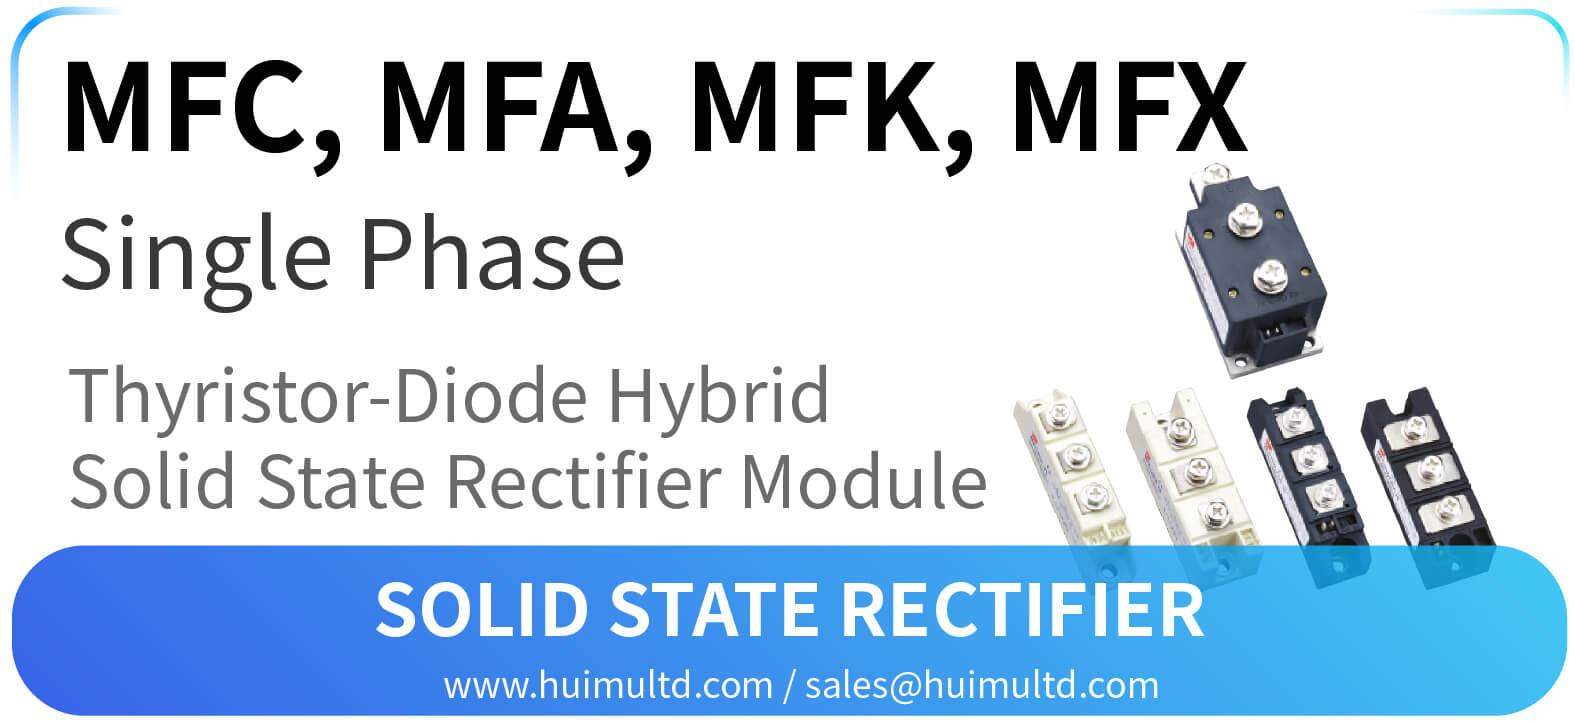 MFC, MFA, MFK, MFX Series Solid State Rectifier